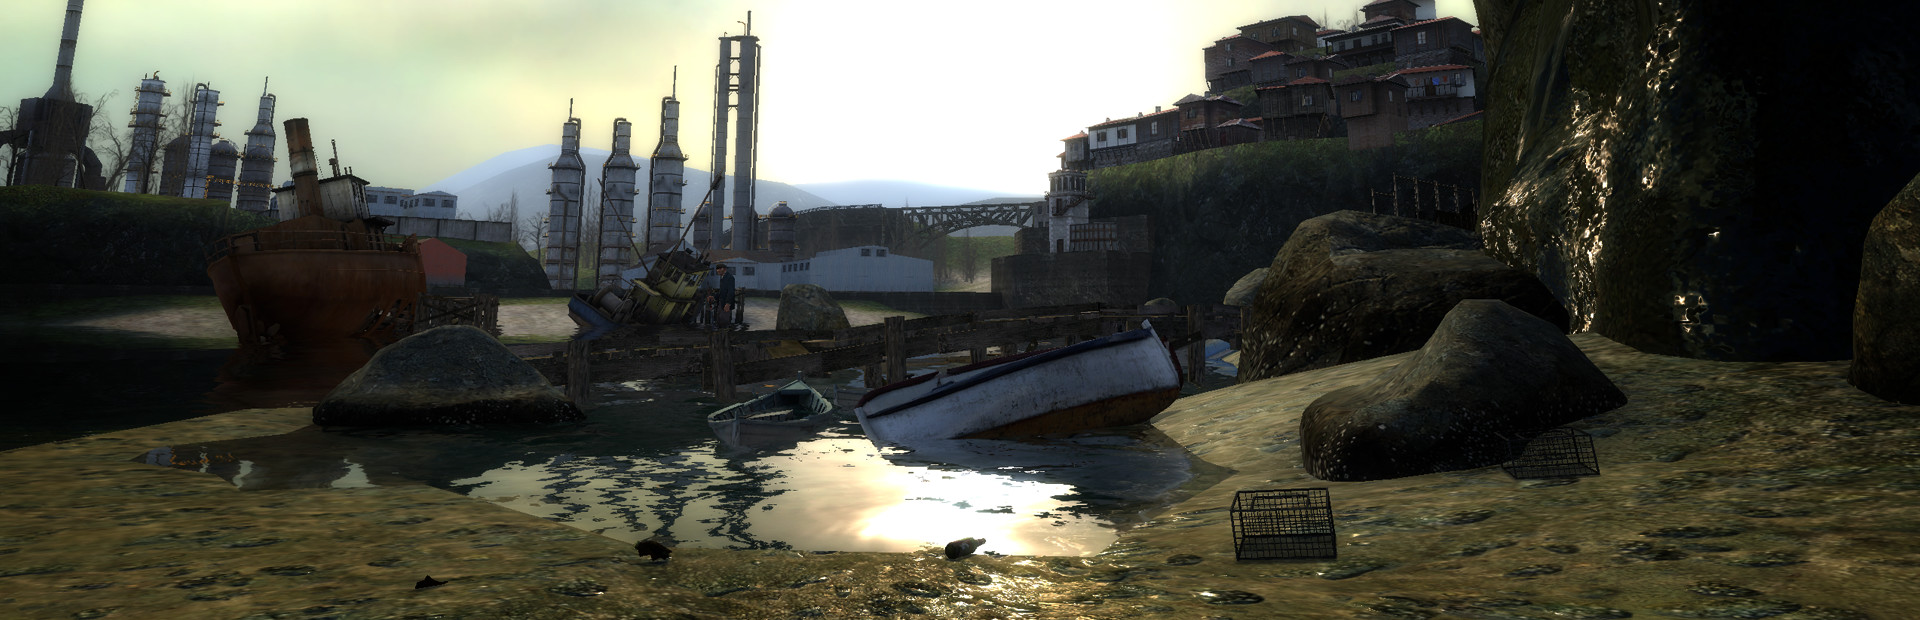 Half-Life 2: Lost Coast cover image